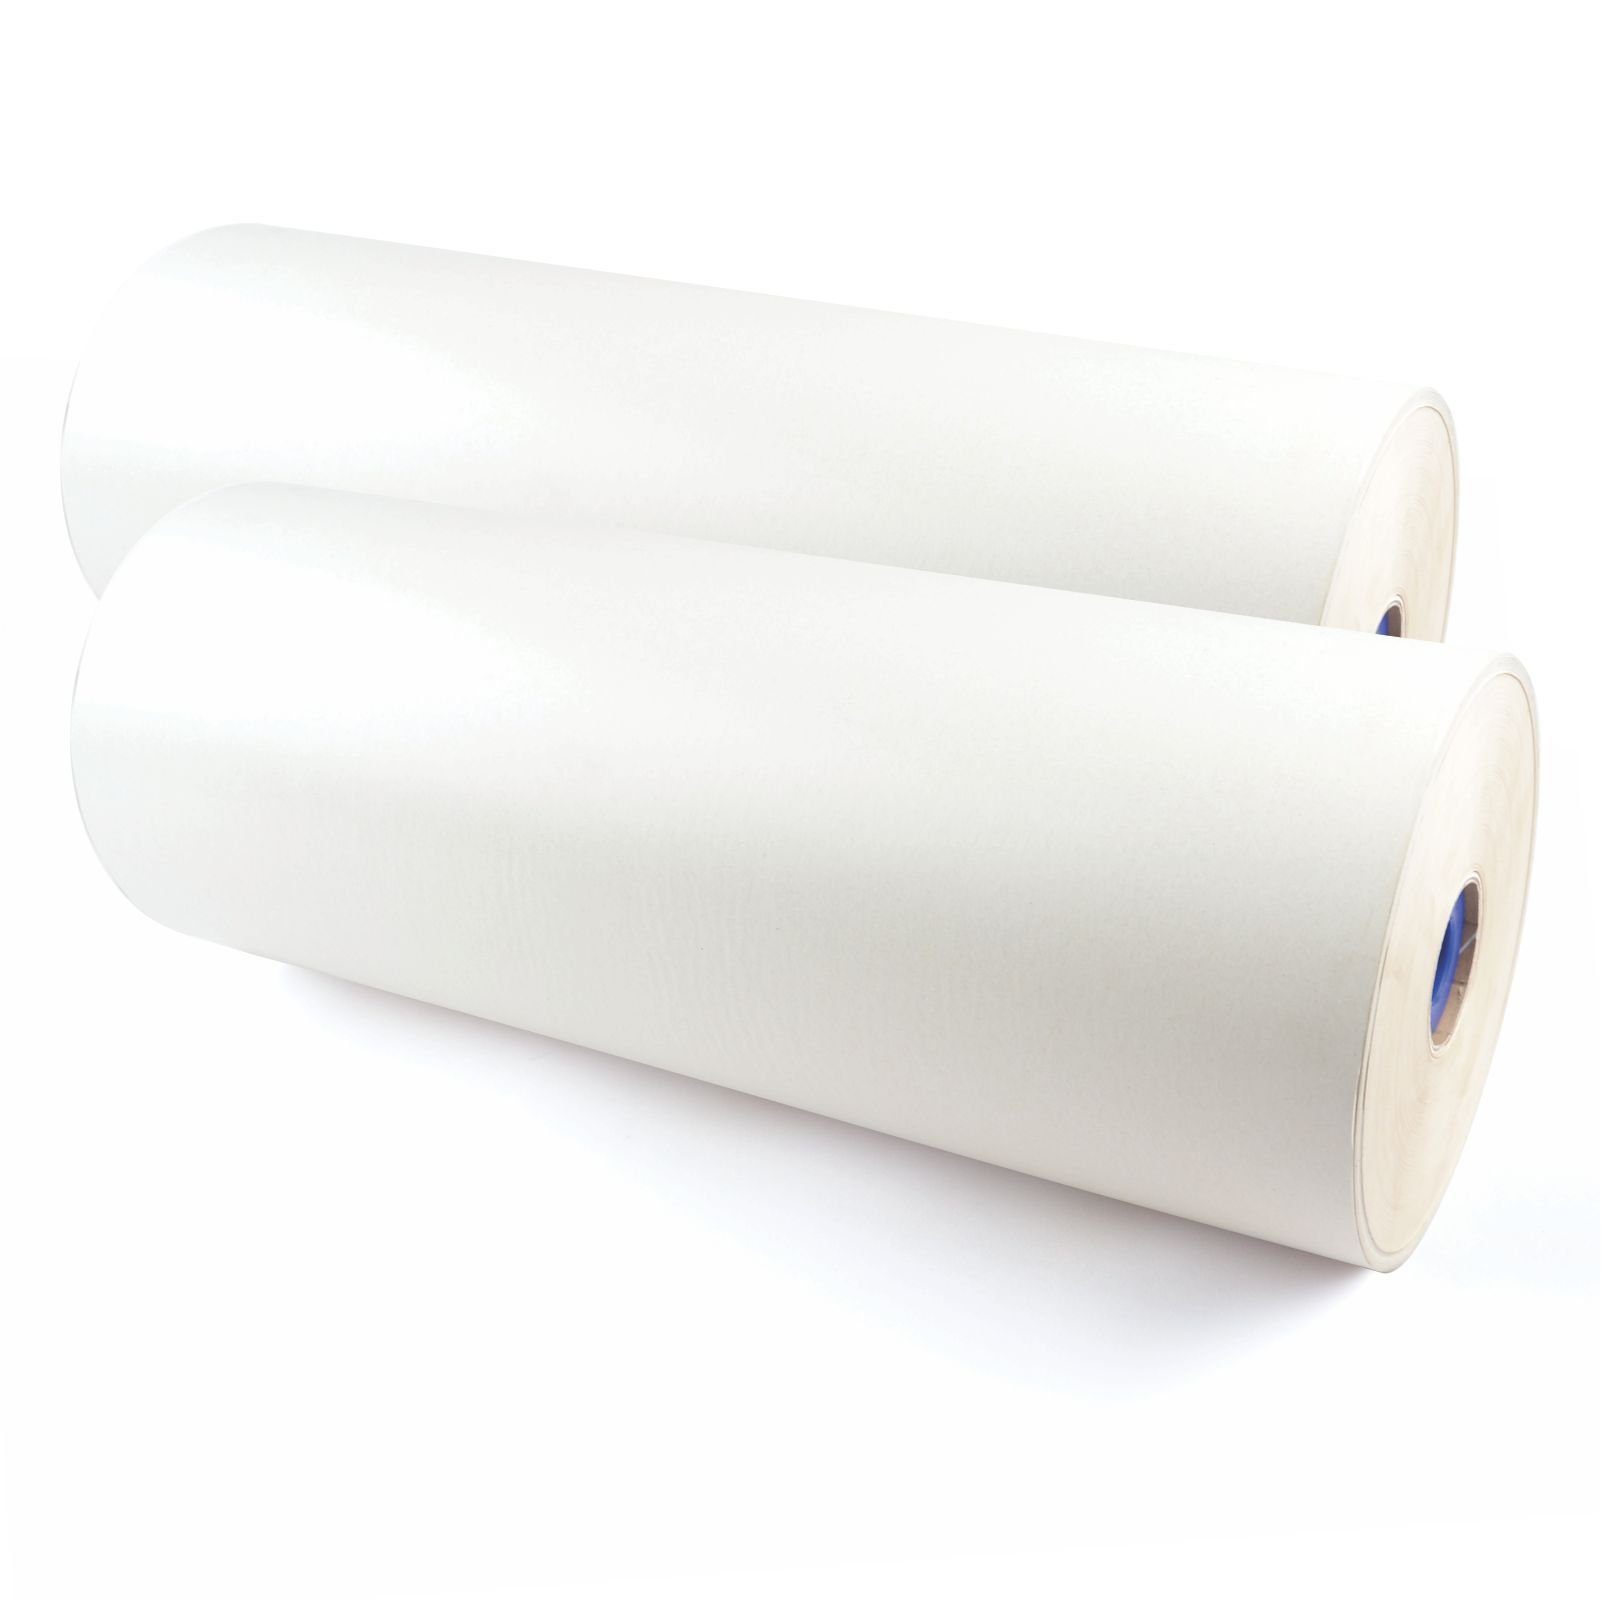 Packpapier 1 Rolle Einschlagpapier, unbedruckt (Breite 50 cm), weiß, 10 kg, Großrollen-Packpapier Packpapier Packpapierrolle Rollenware | Packpapier